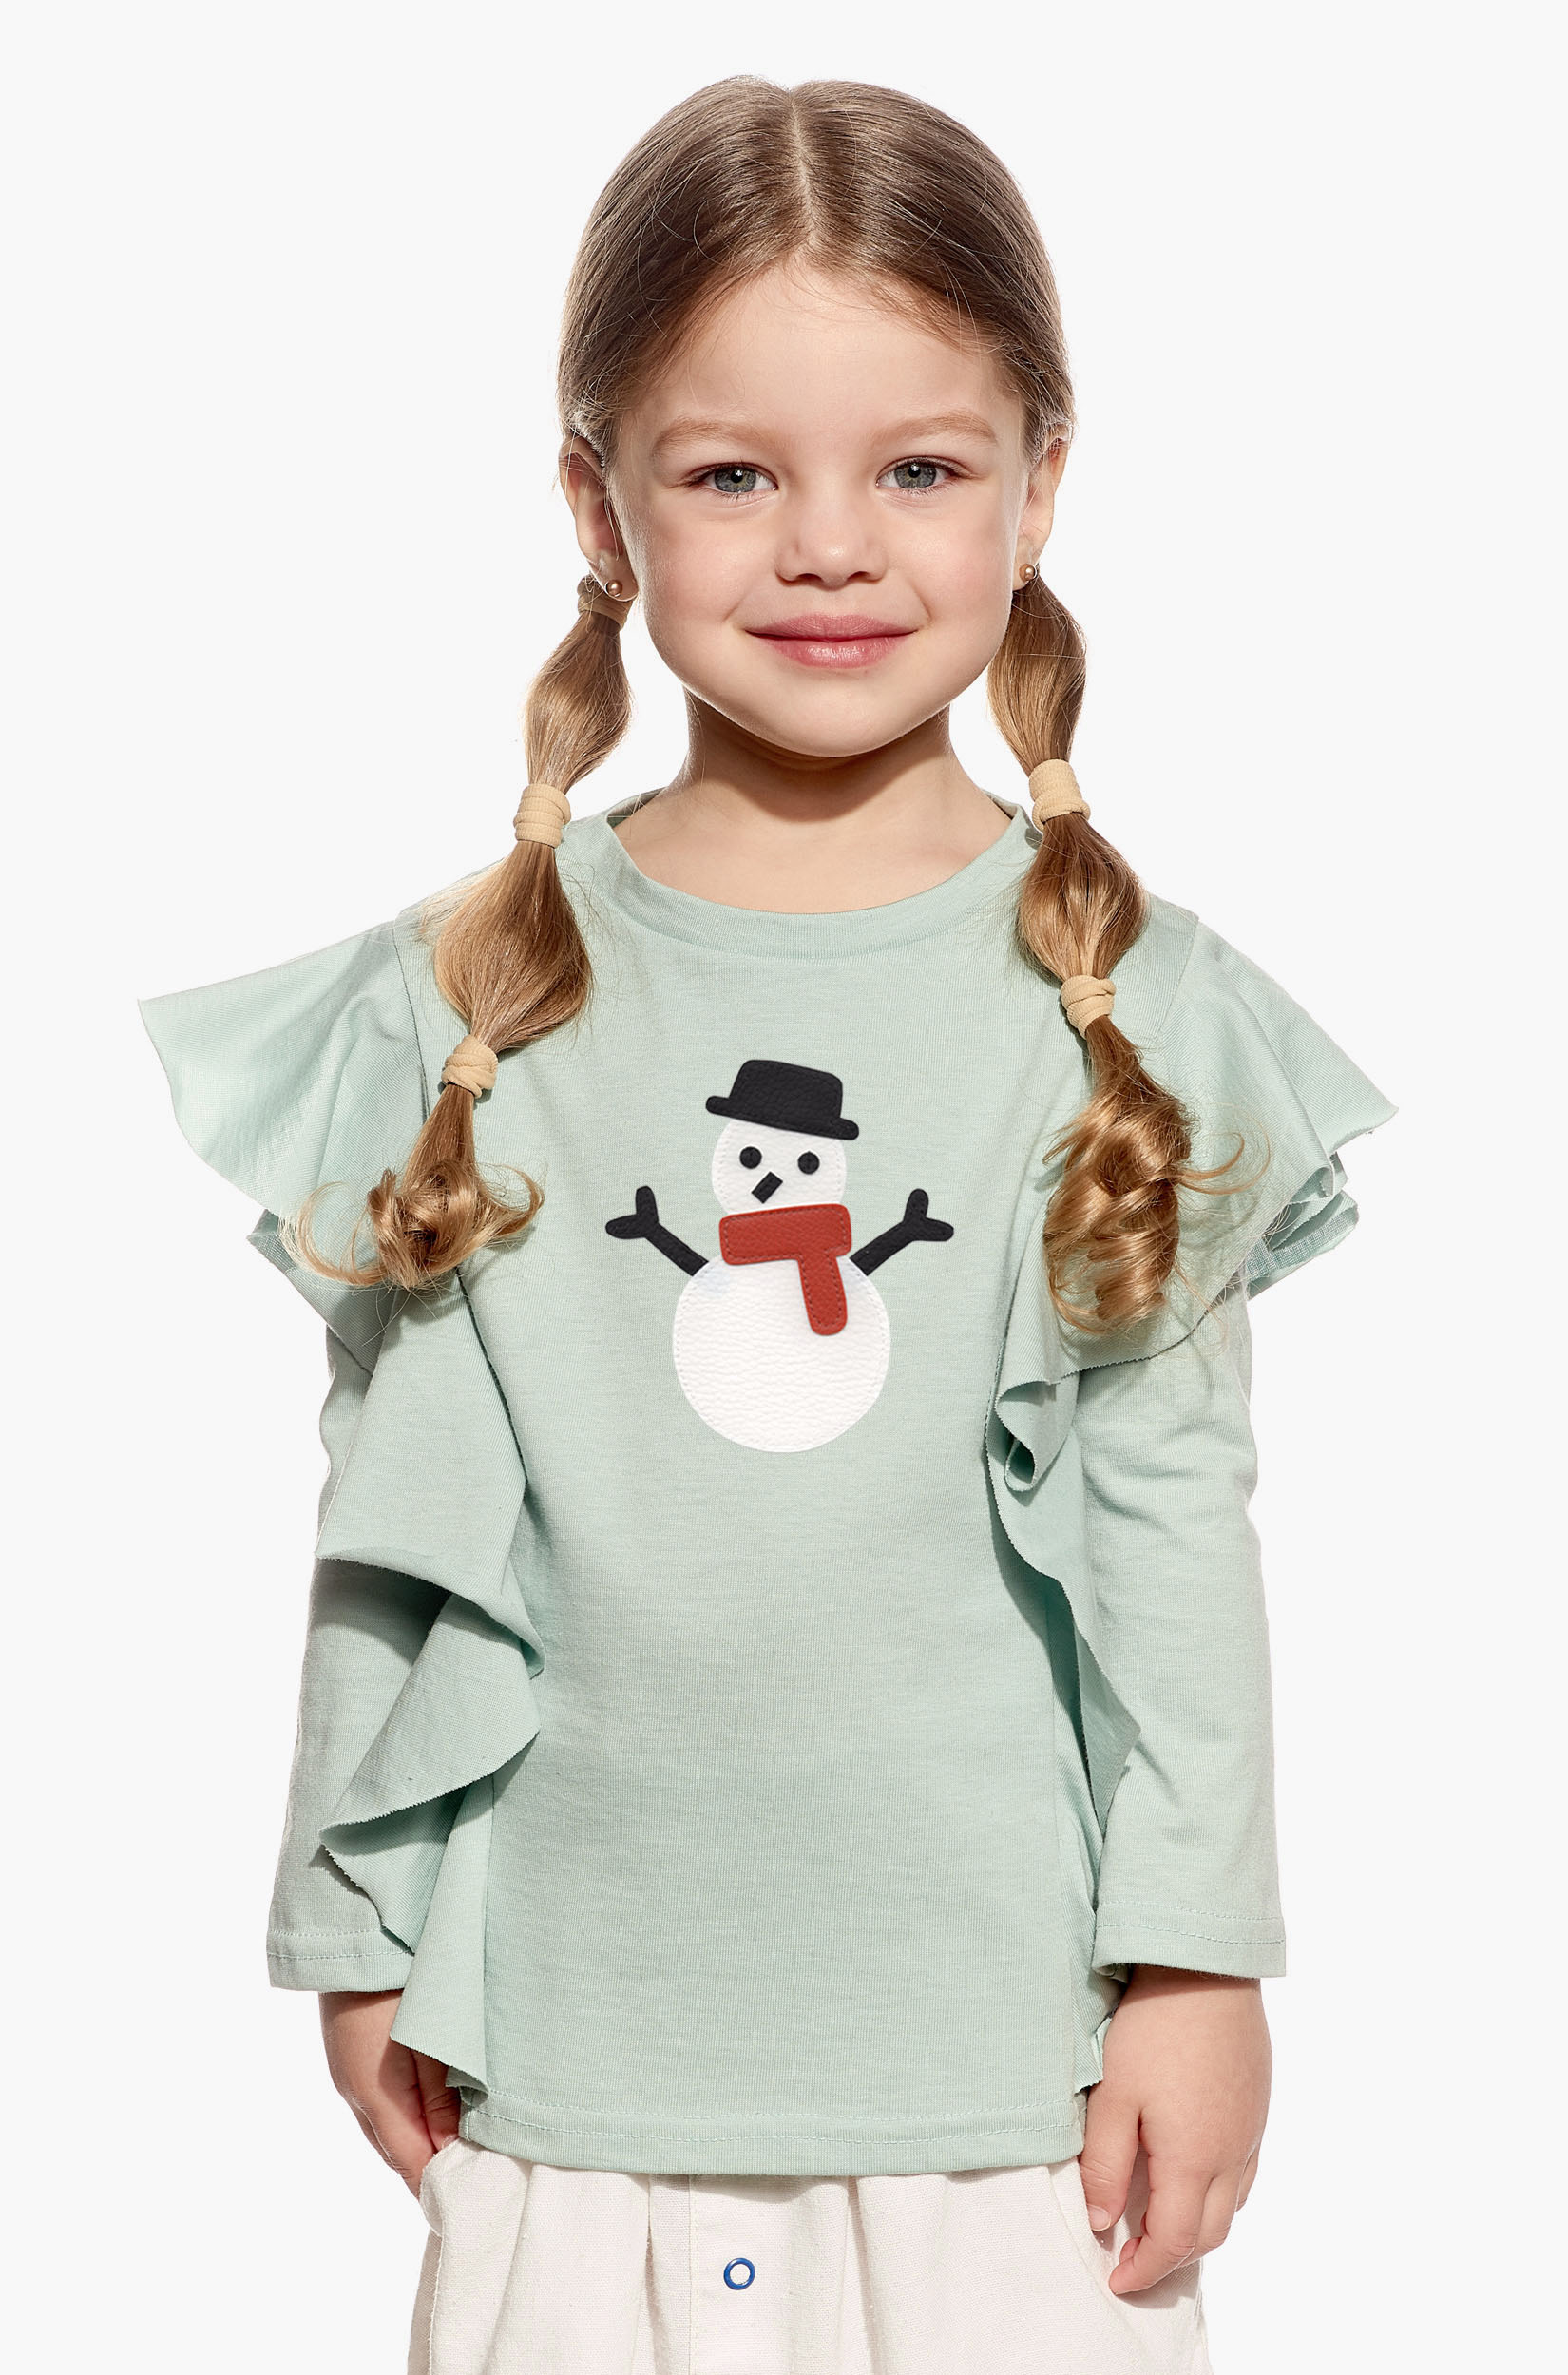 Shirt with a snowman